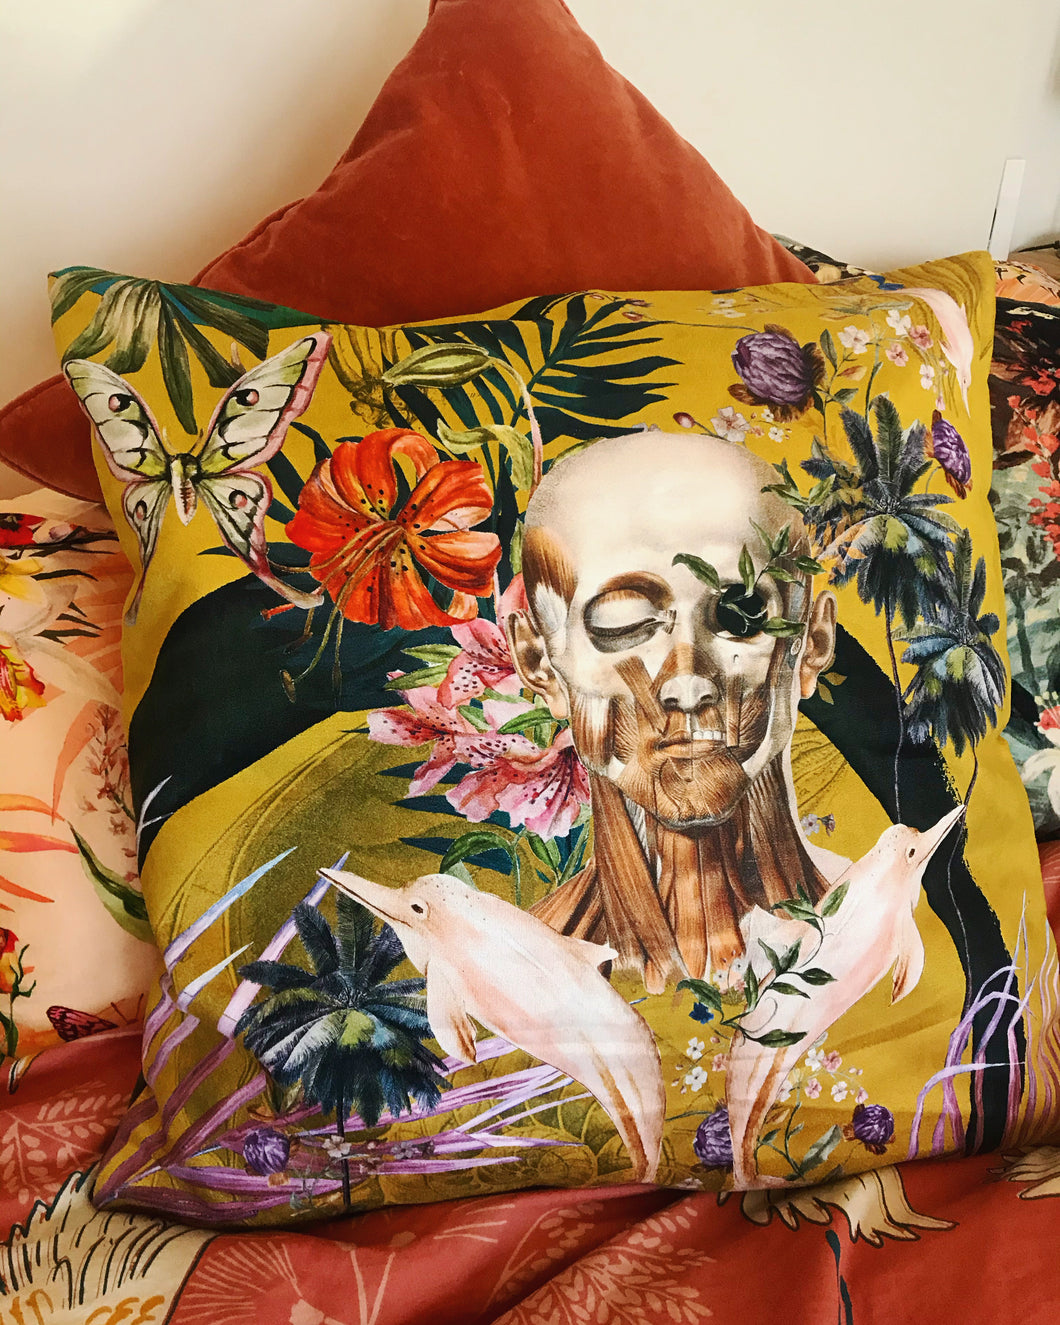 Large Yellow Cushion with striking Watercolour skull design 'Boto Cushion' in Vegan friendly Suede 60x60cm